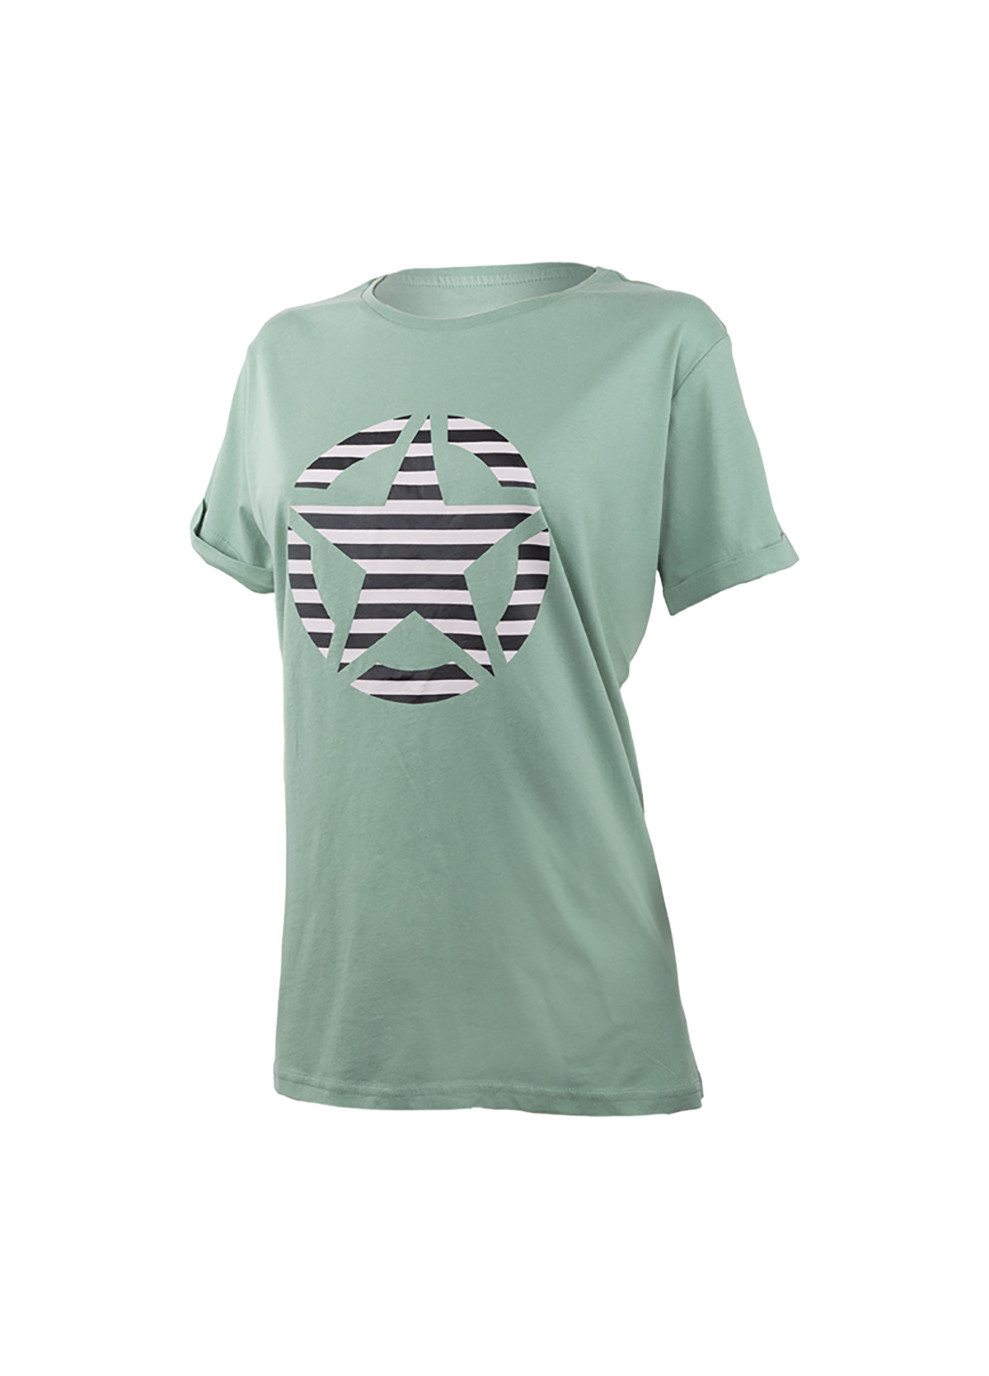 Хаки (оливковая) демисезон женская футболка t-shirt oversize star striped print turn хаки Jeep